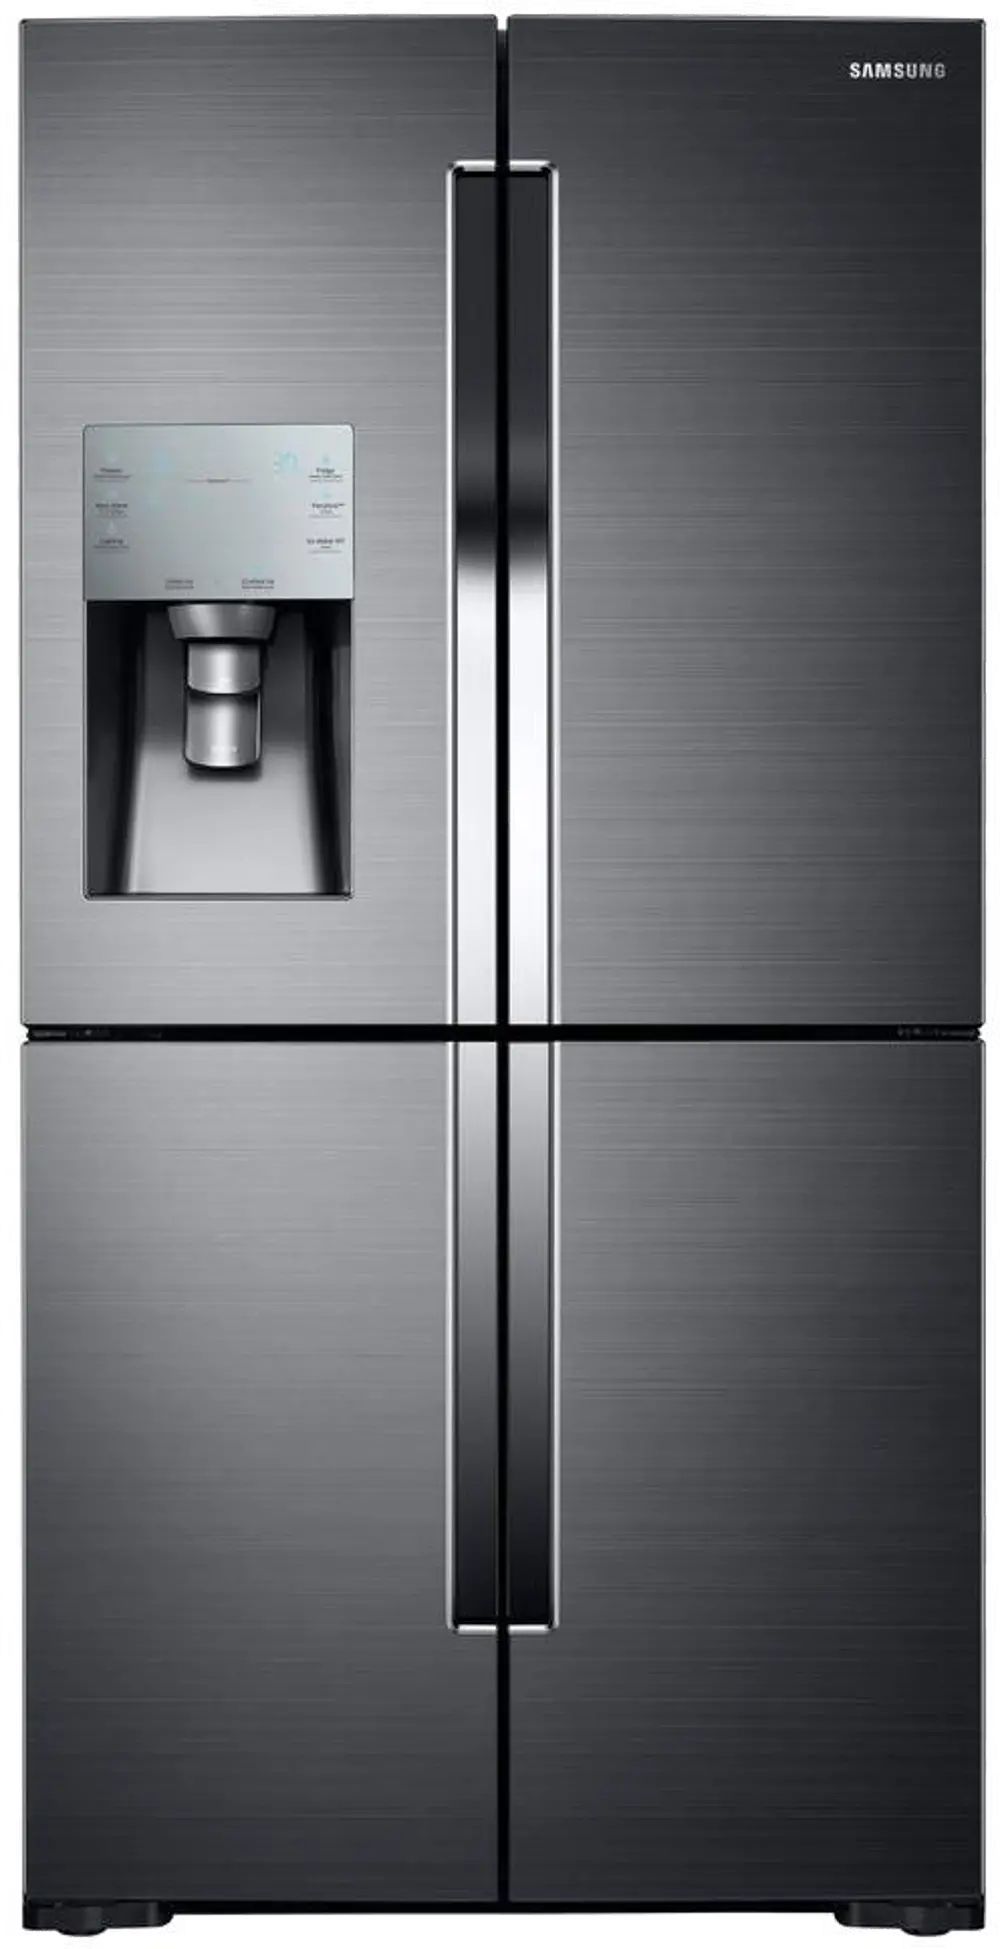 RF28K9070SG Samsung 4 Door French Door Smart Refrigerator with FlexZone - 28.1 cu. ft., 36 Inch Black Stainless Steel-1